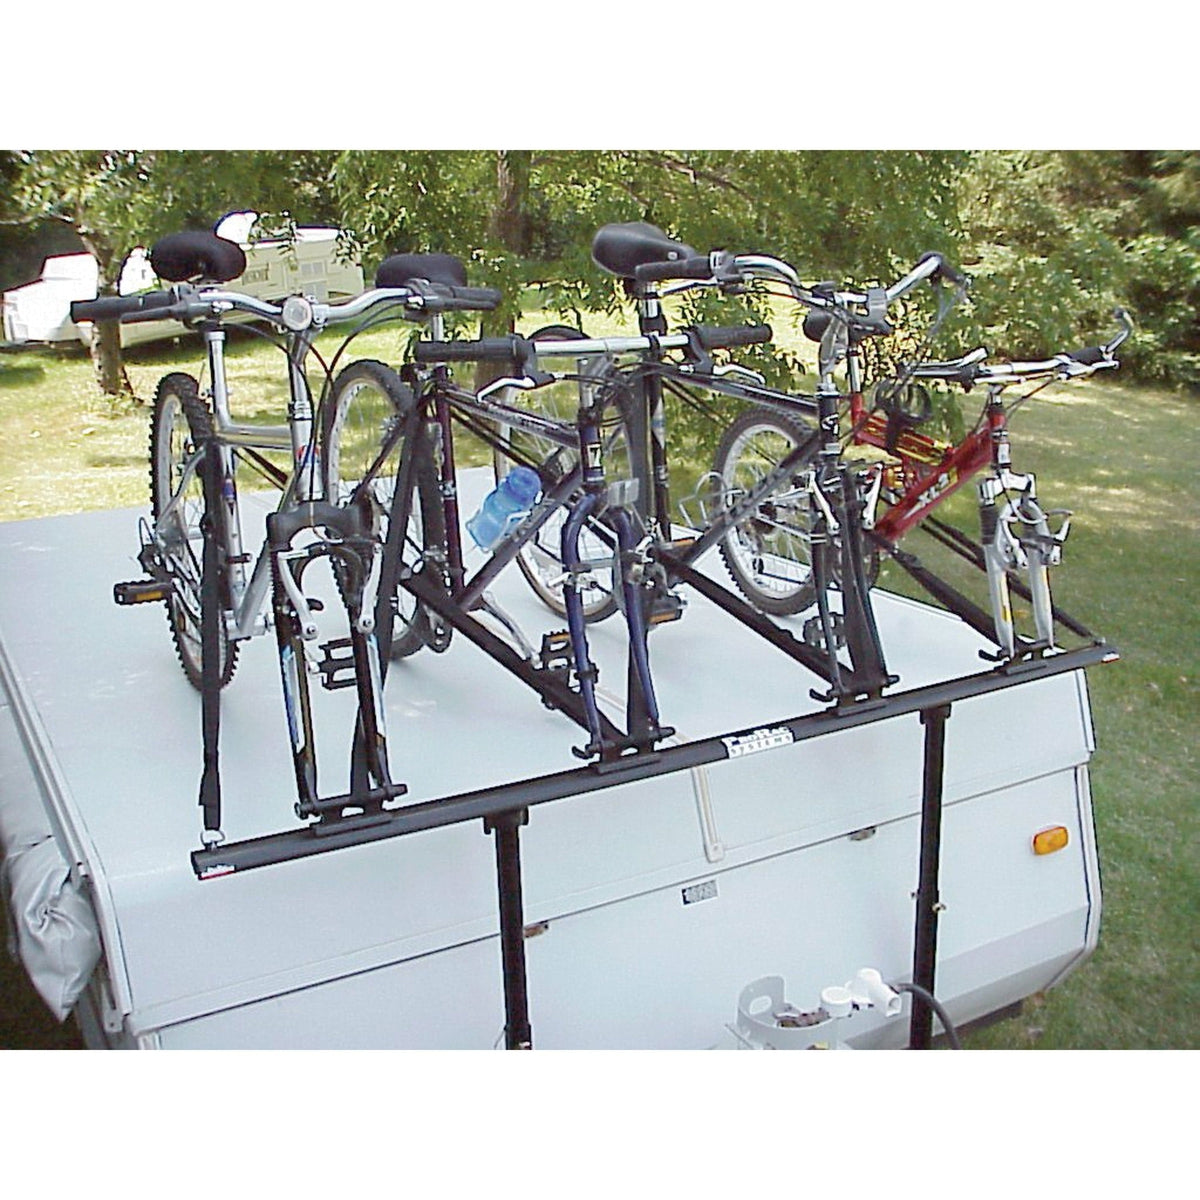 ProRac Systems Qualifies for Free Shipping ProRac Tent Trailer Proformance Bike Rack 2-Bike Carrier #RVPB020-1